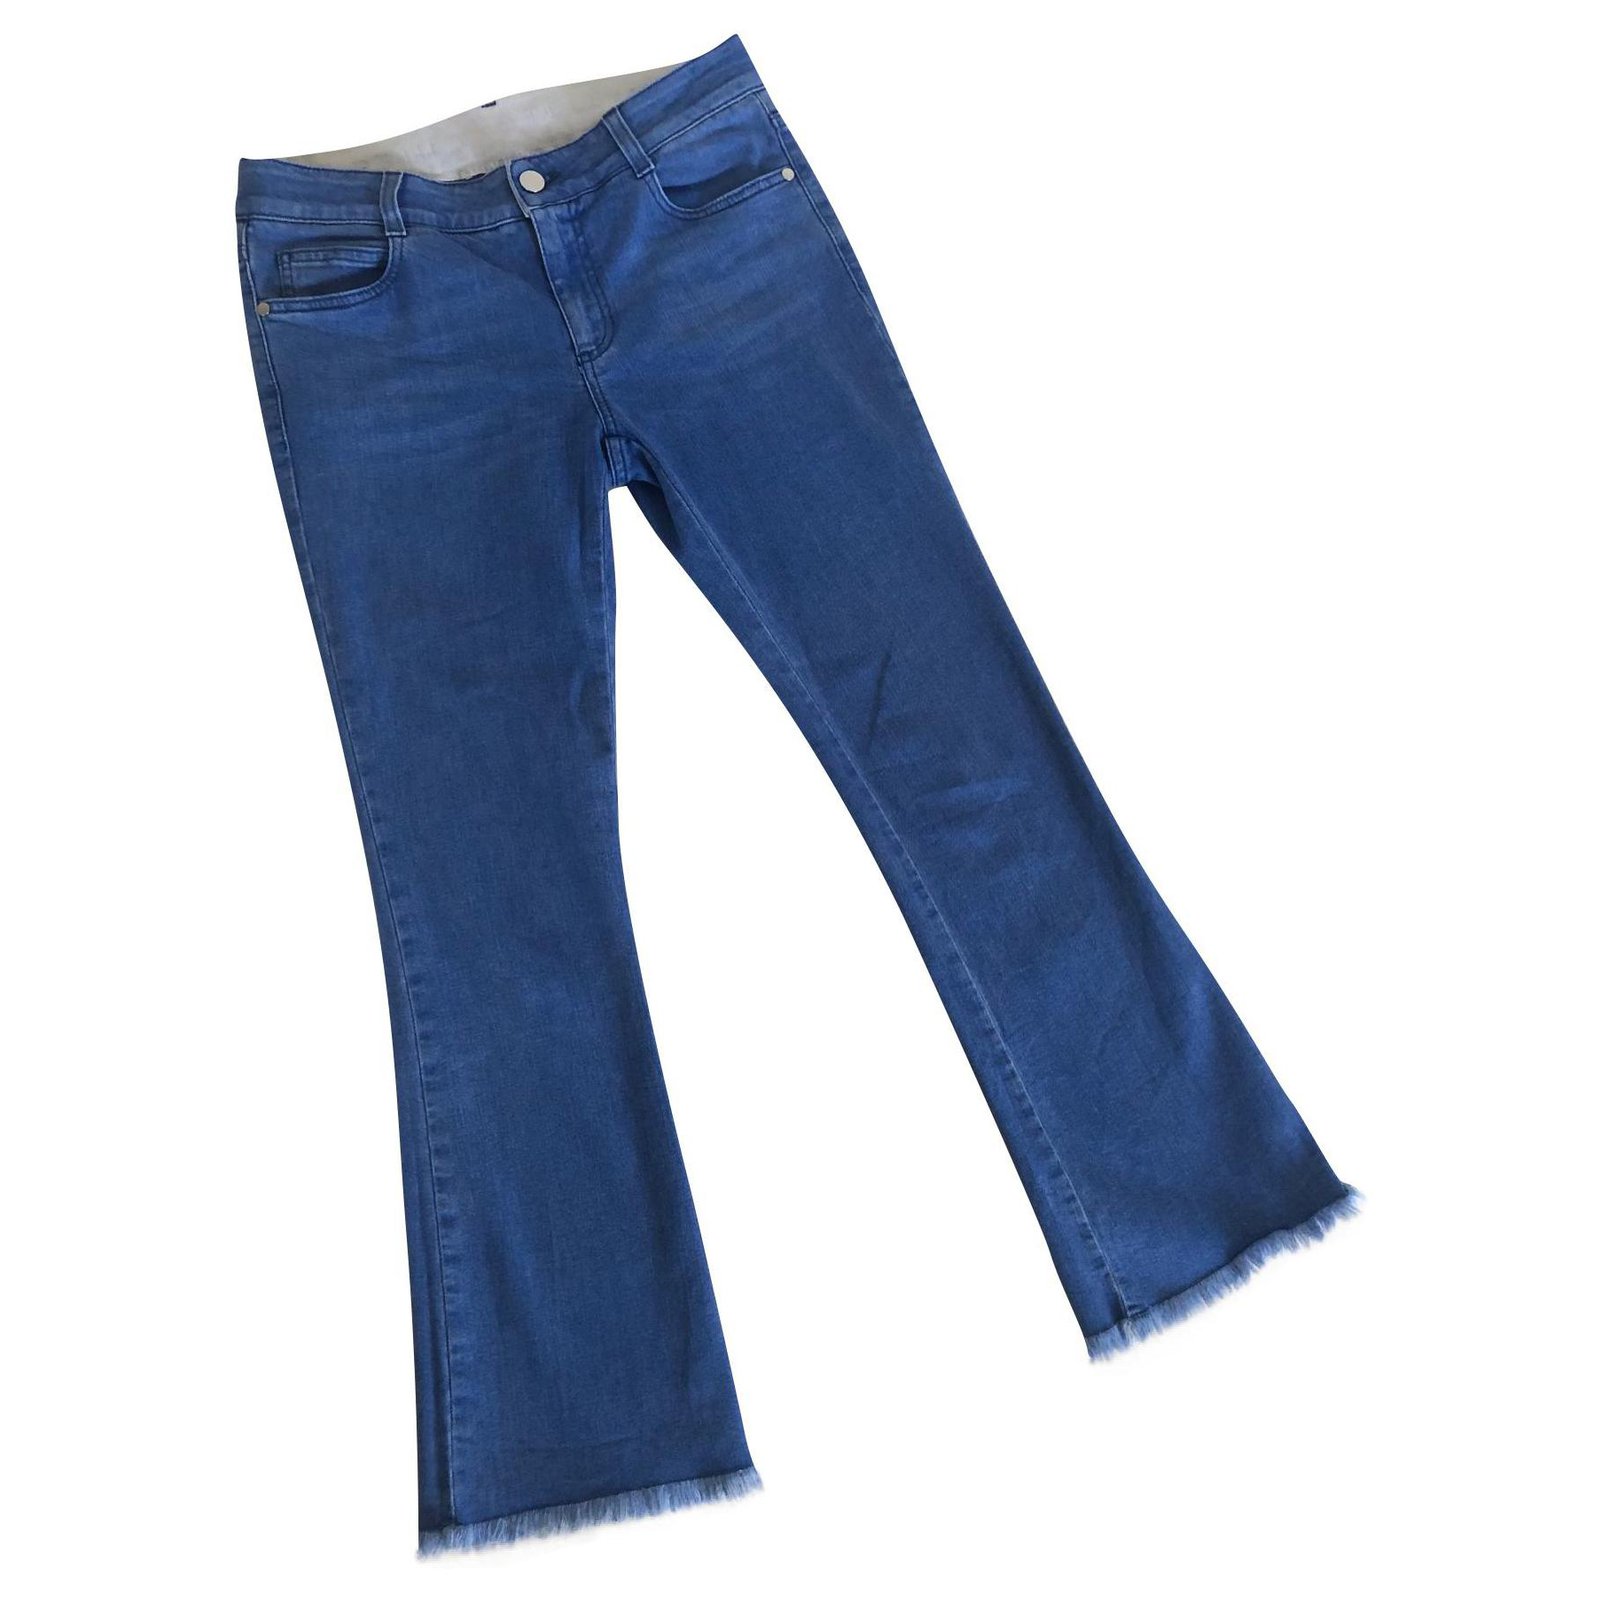 mc jeans price